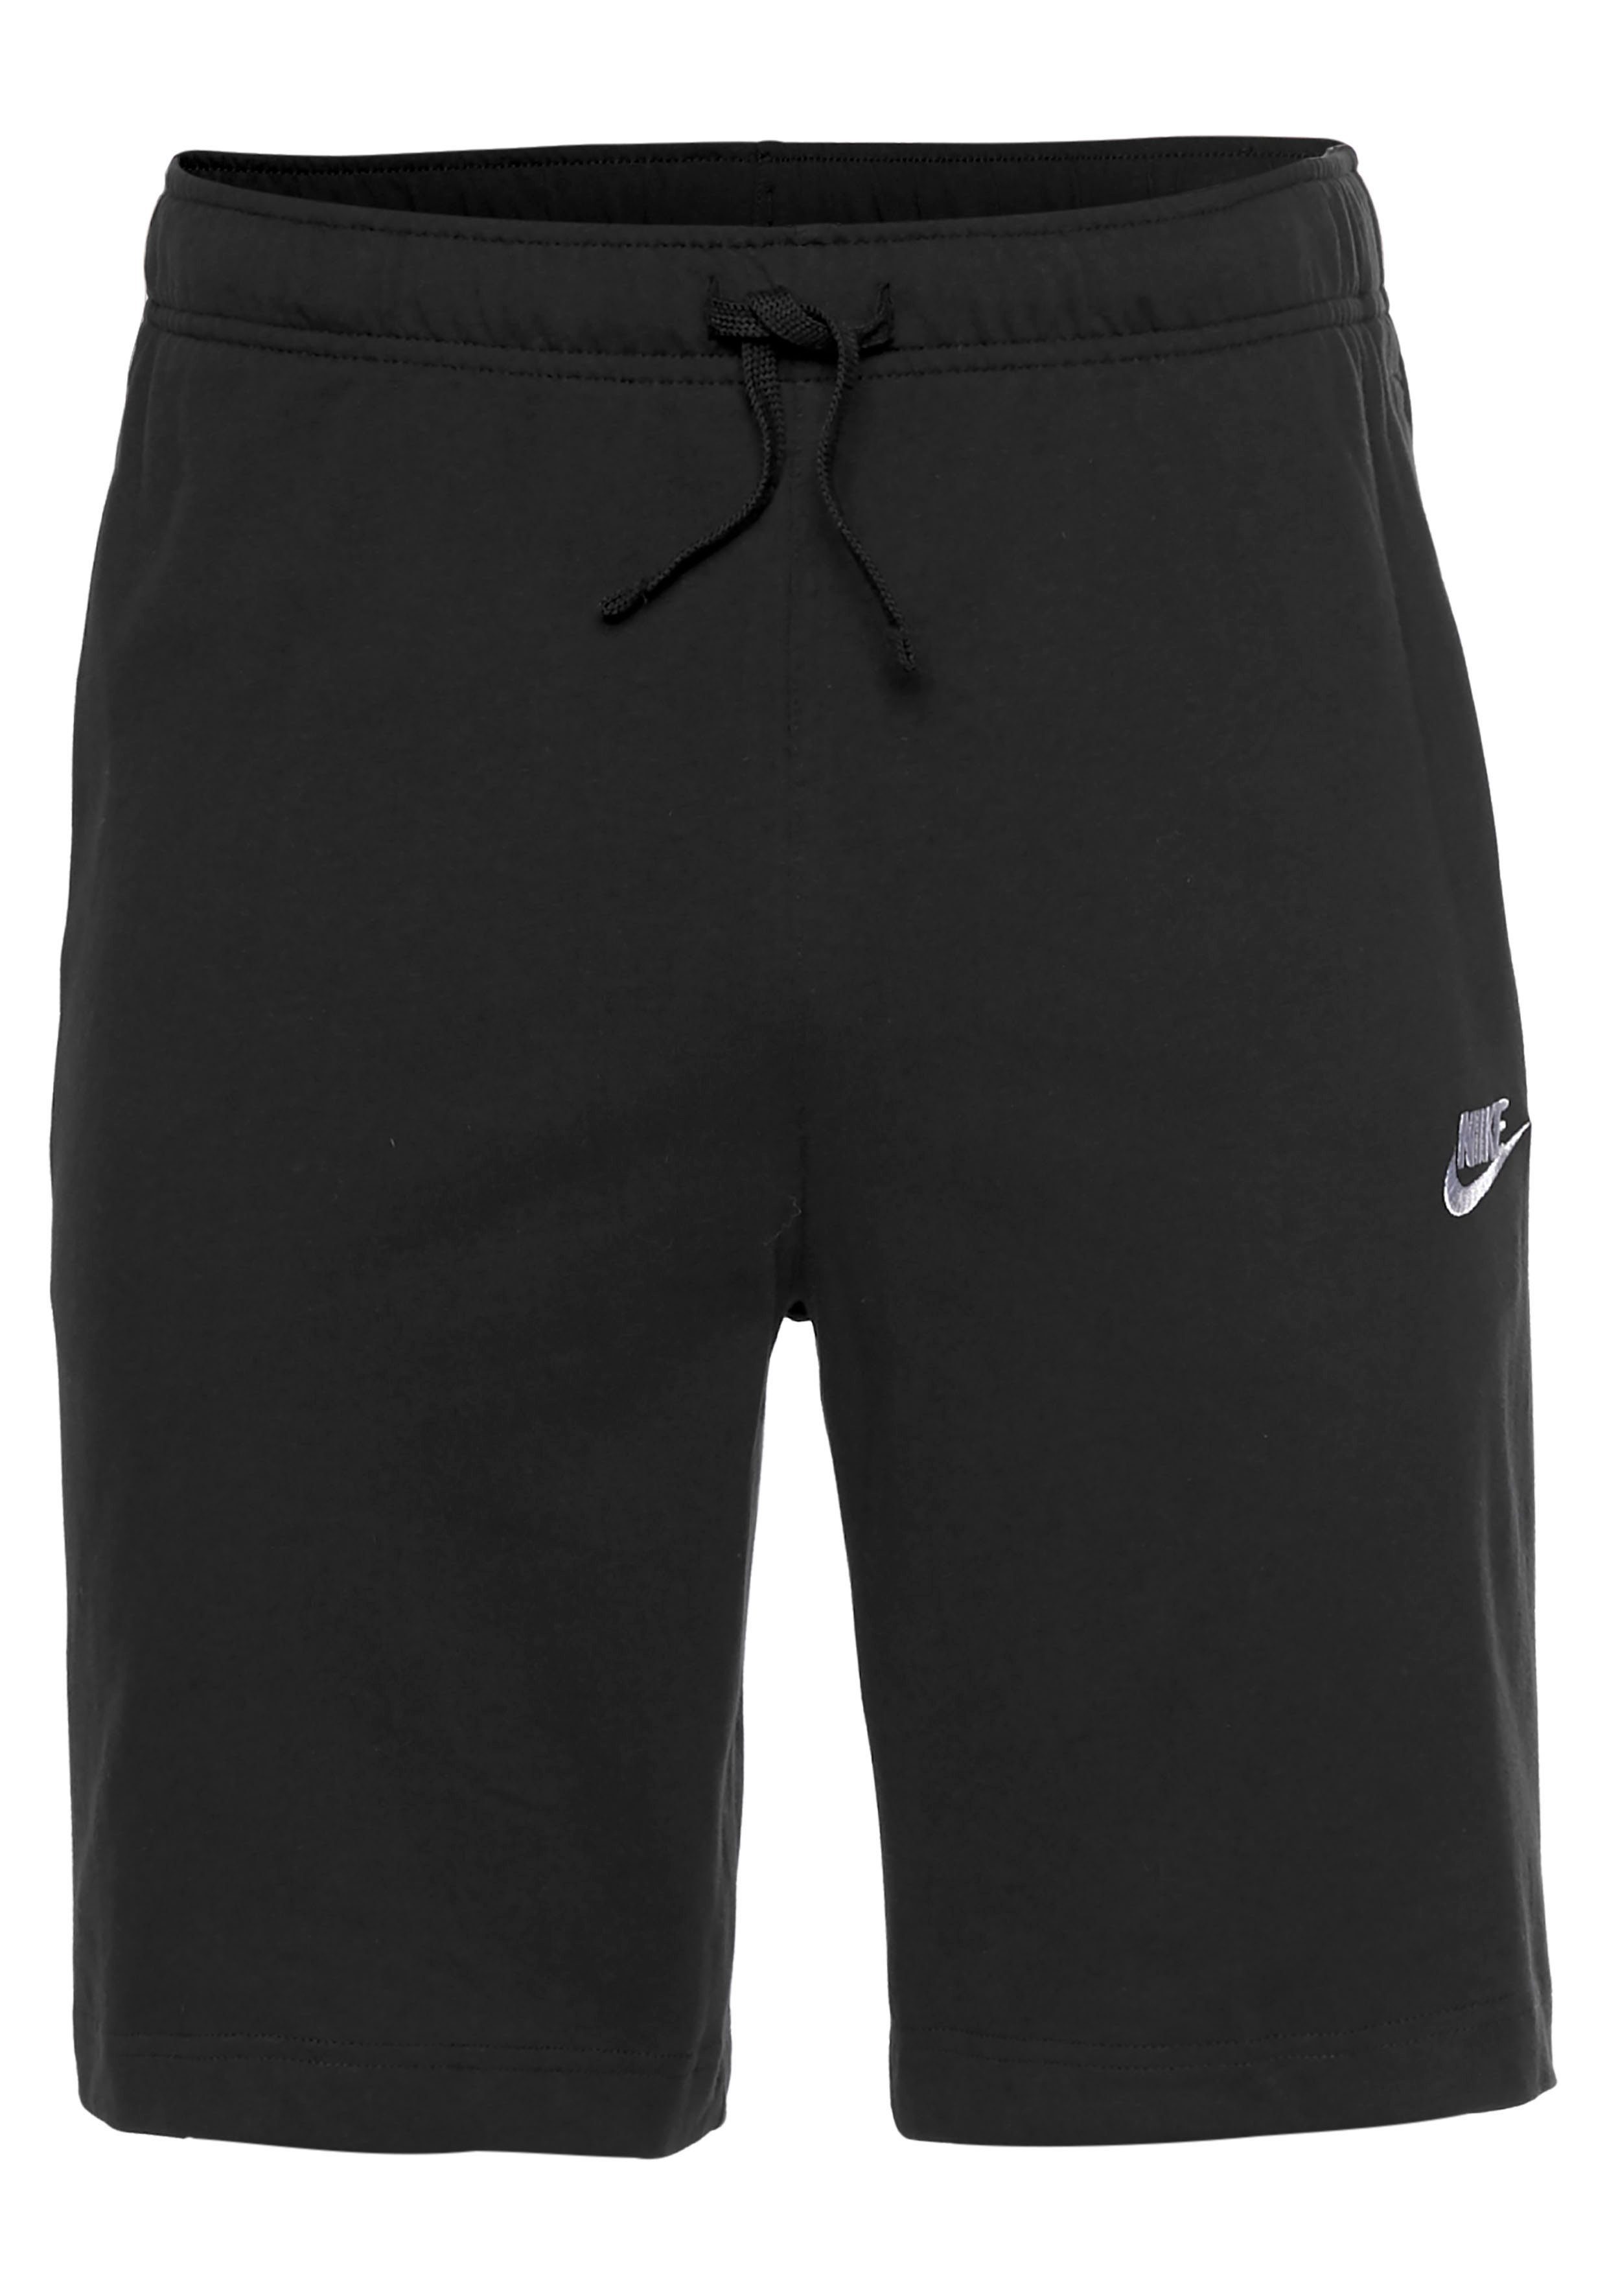 Club Shorts schwarz Men's Shorts Nike Sportswear